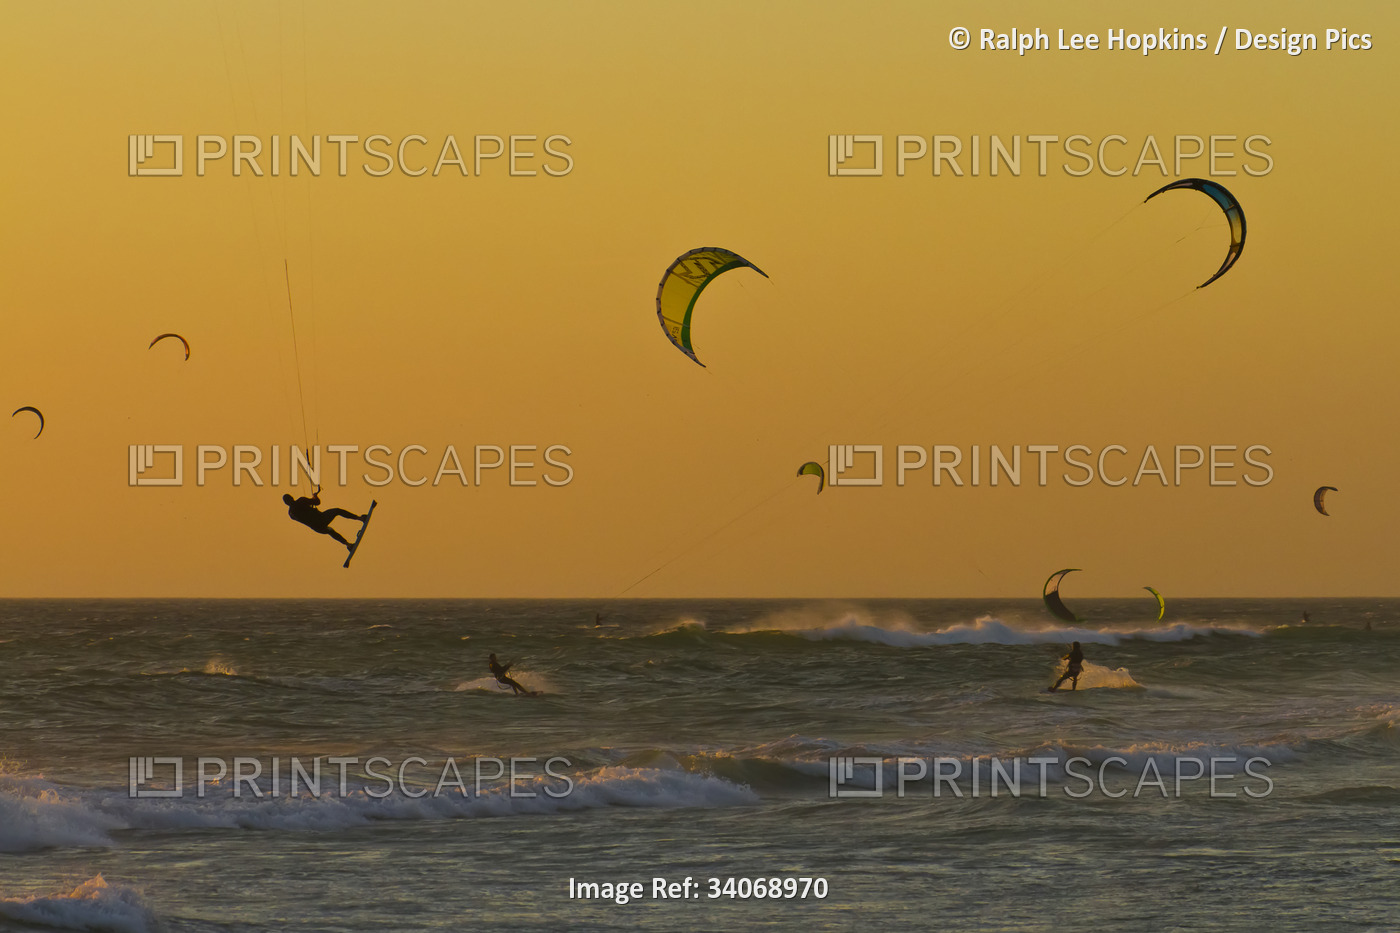 Kite surfers at sunset.